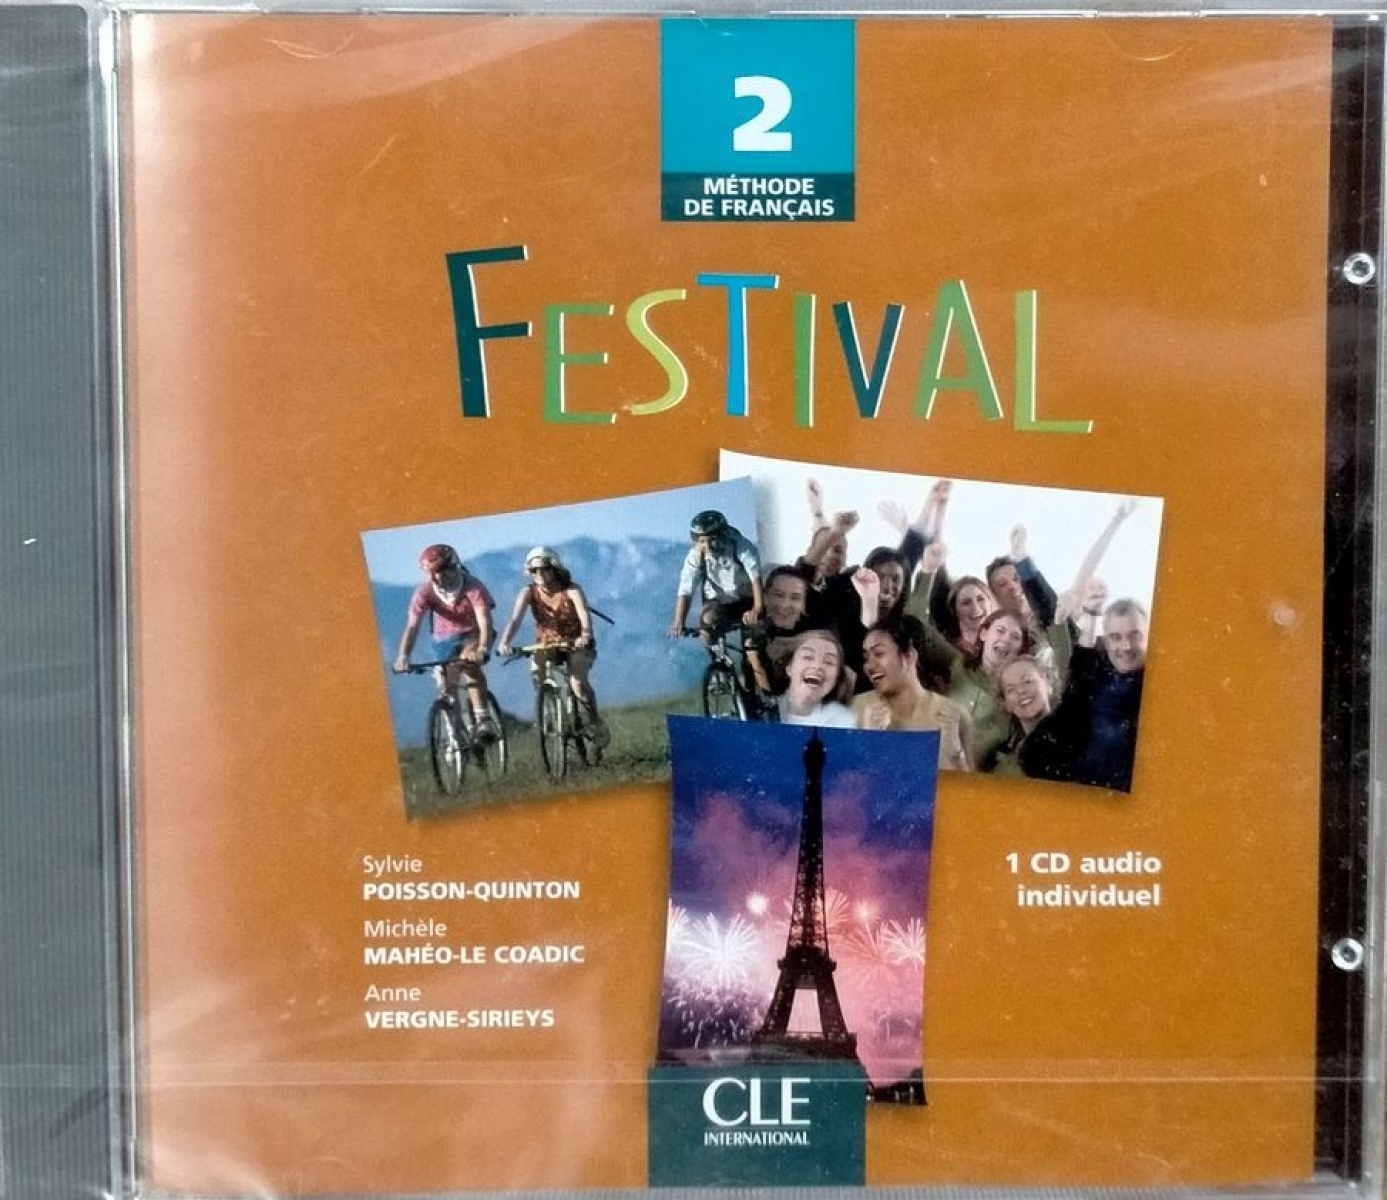 Festival 2 CD ind 